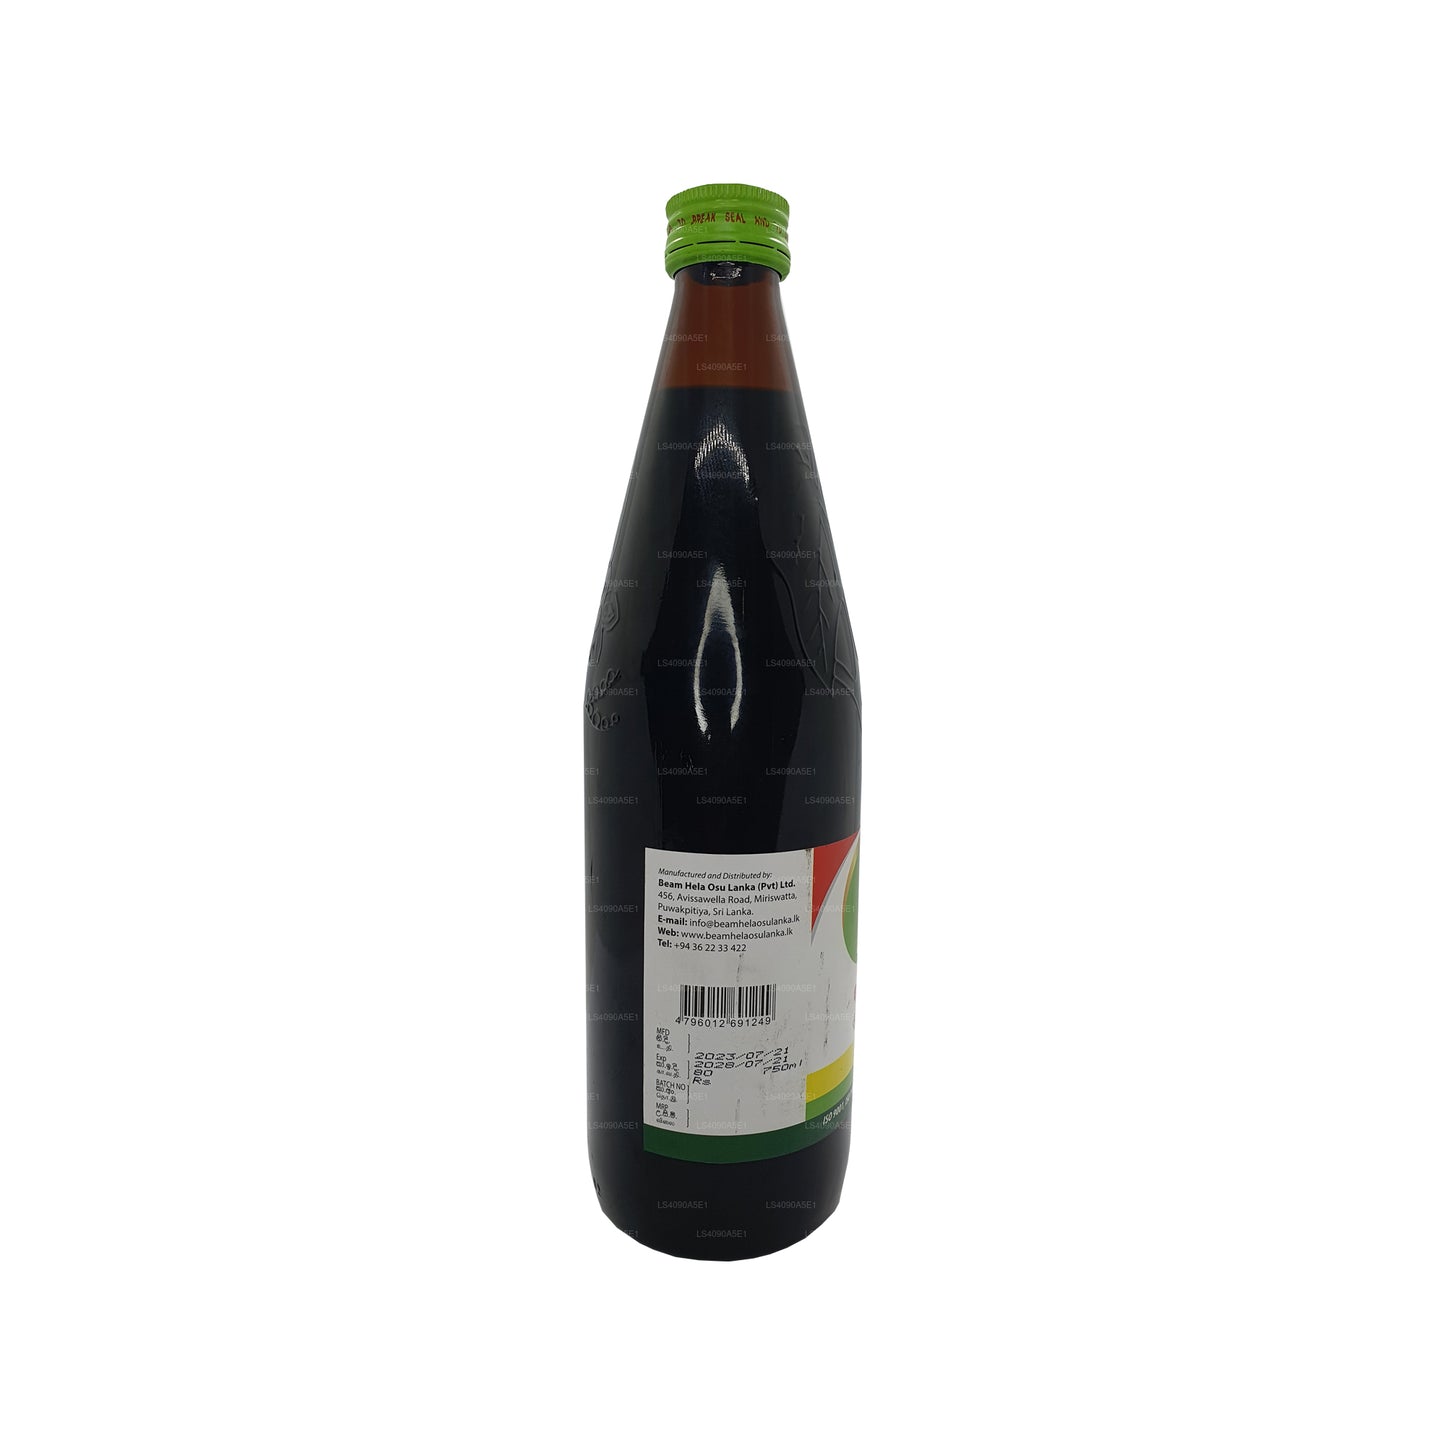 Aceite Beam Shoolahara (30 ml)